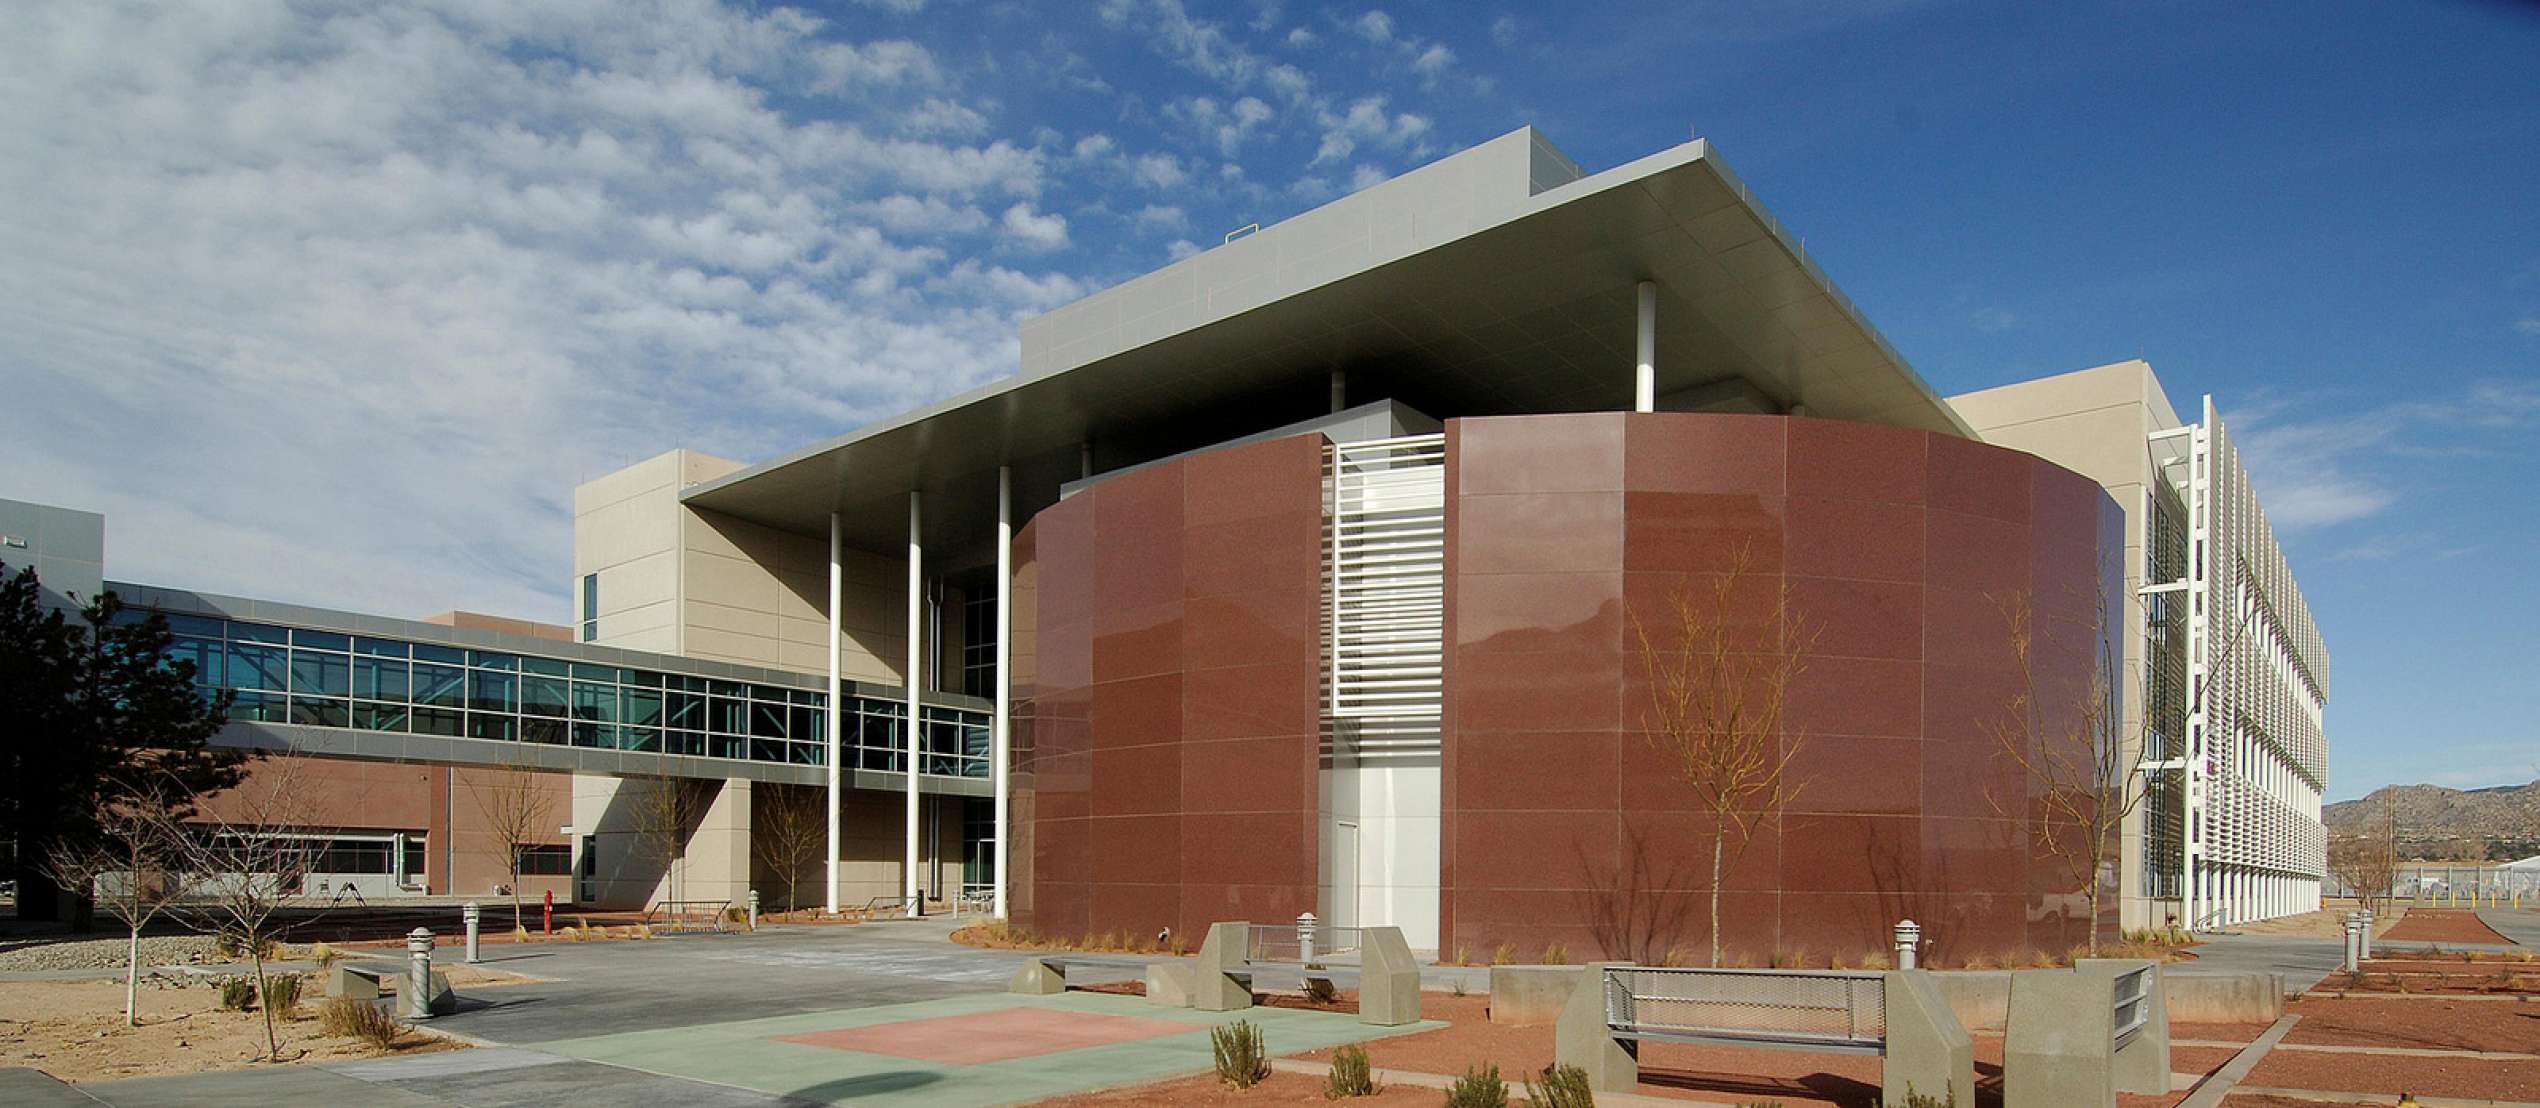 The Sandia National Laboratory campus.